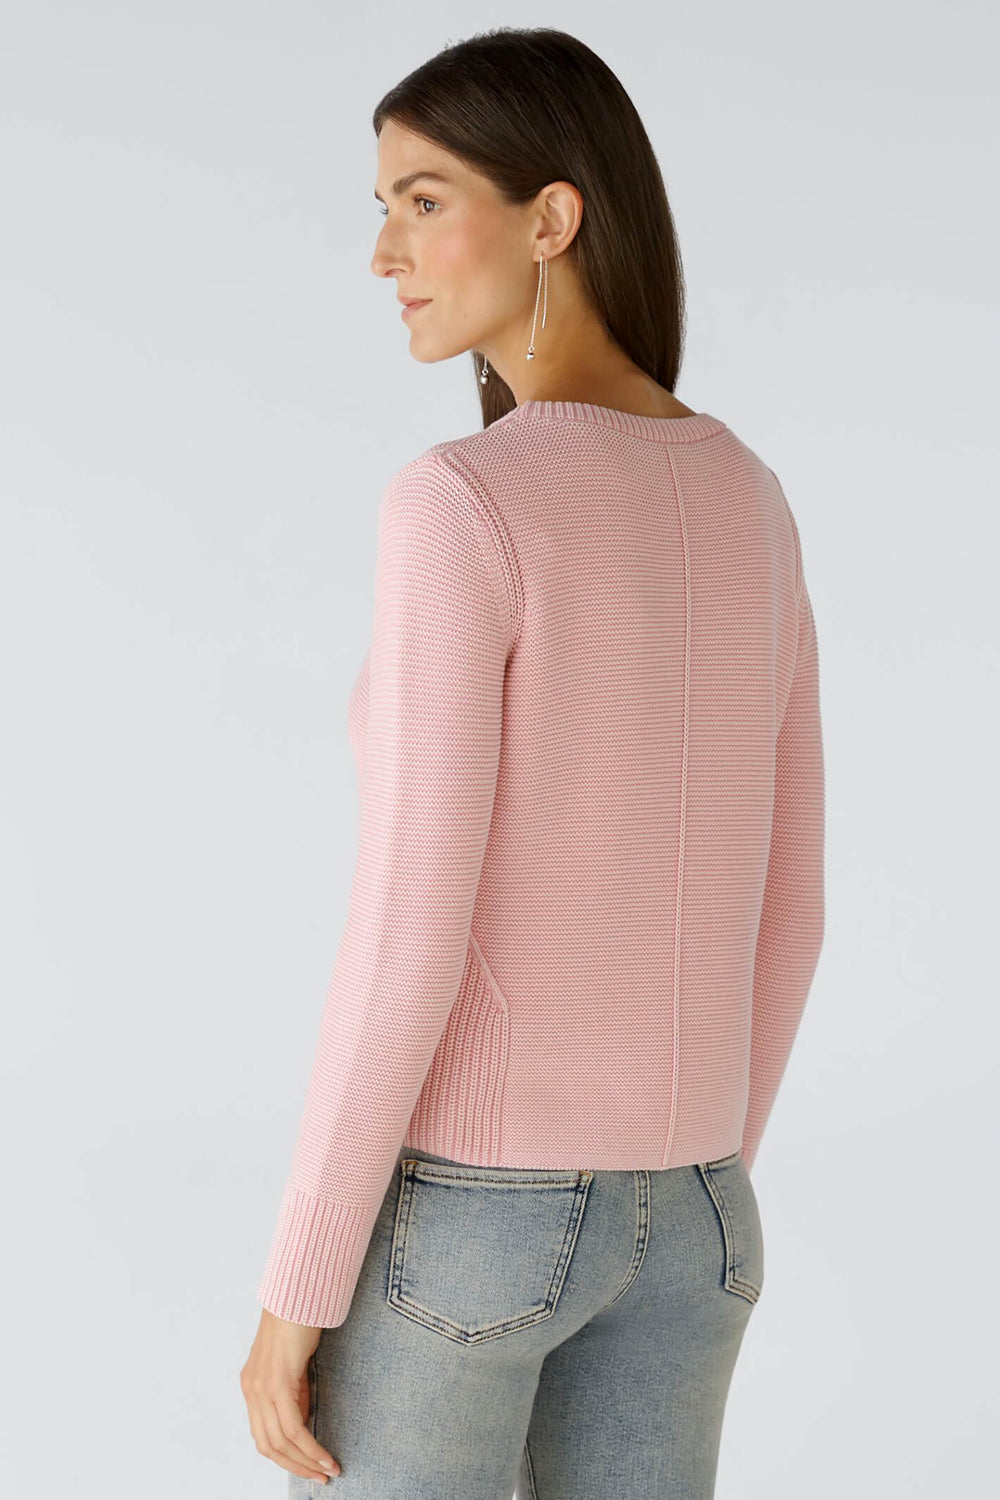 Oui 86090 Cameo Pink Ribbed Panel Long Sleeve Jumper - Olivia Grace Fashion